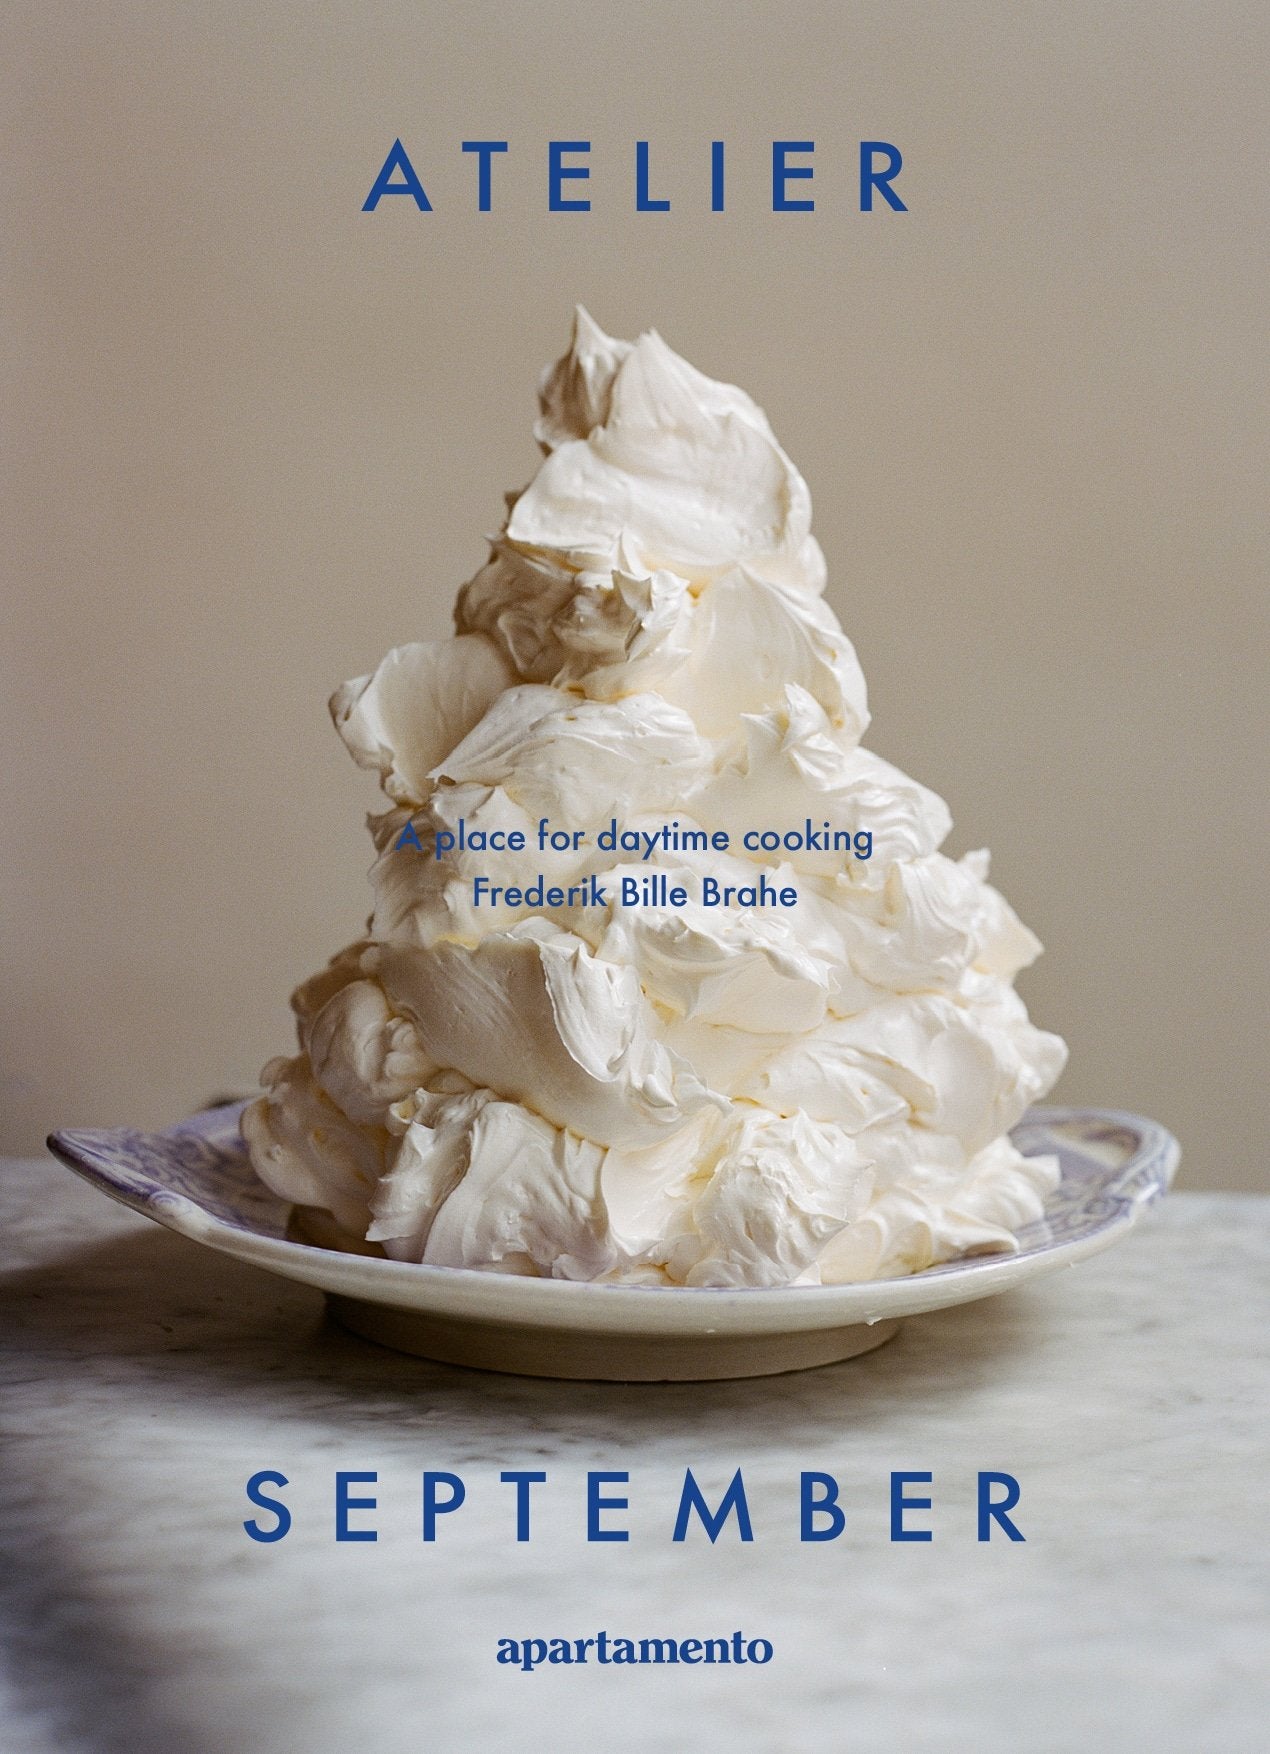 Atelier September: A place for daytime cooking (Frederik Bille Brahe)